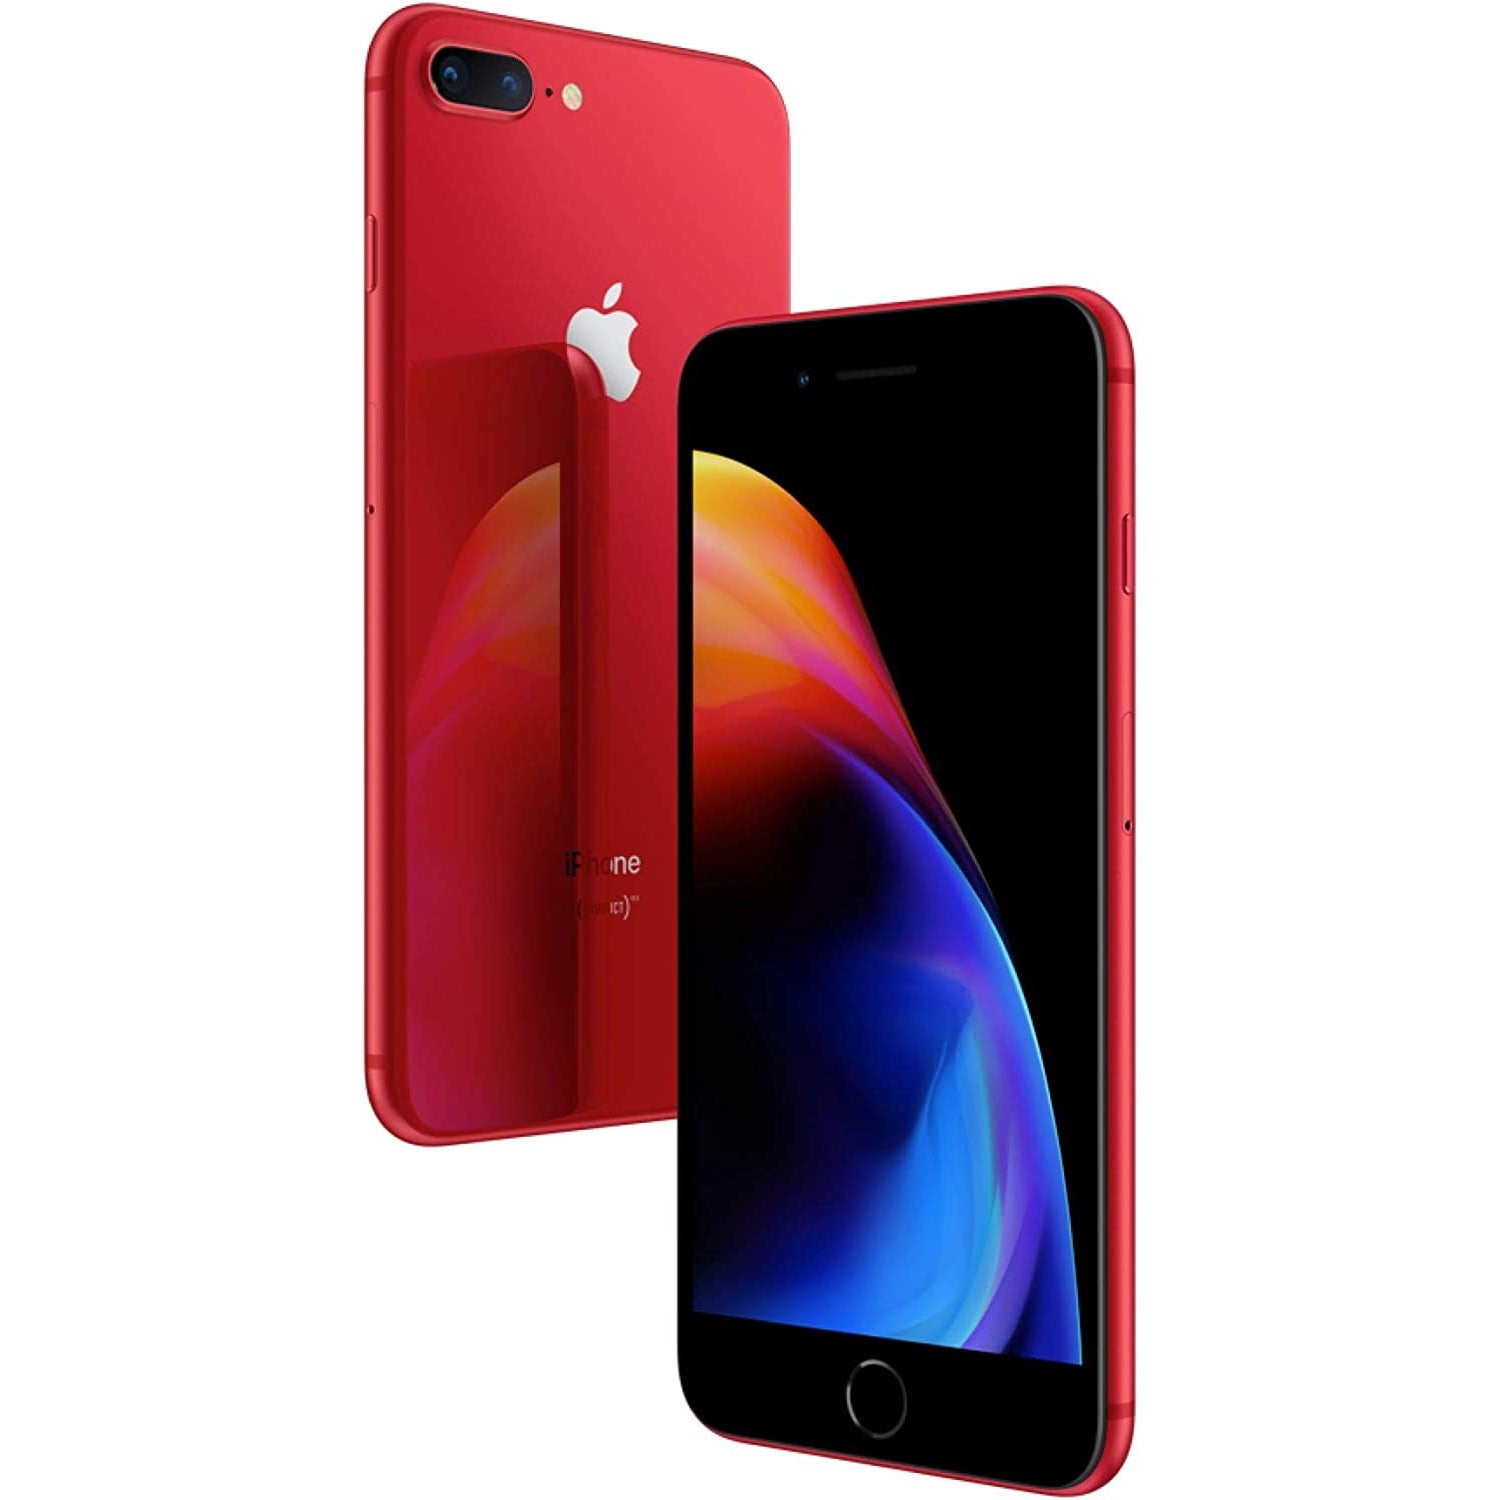 Apple iPhone 8 Plus, 64GB, Red, Unlocked - Refurbished Good